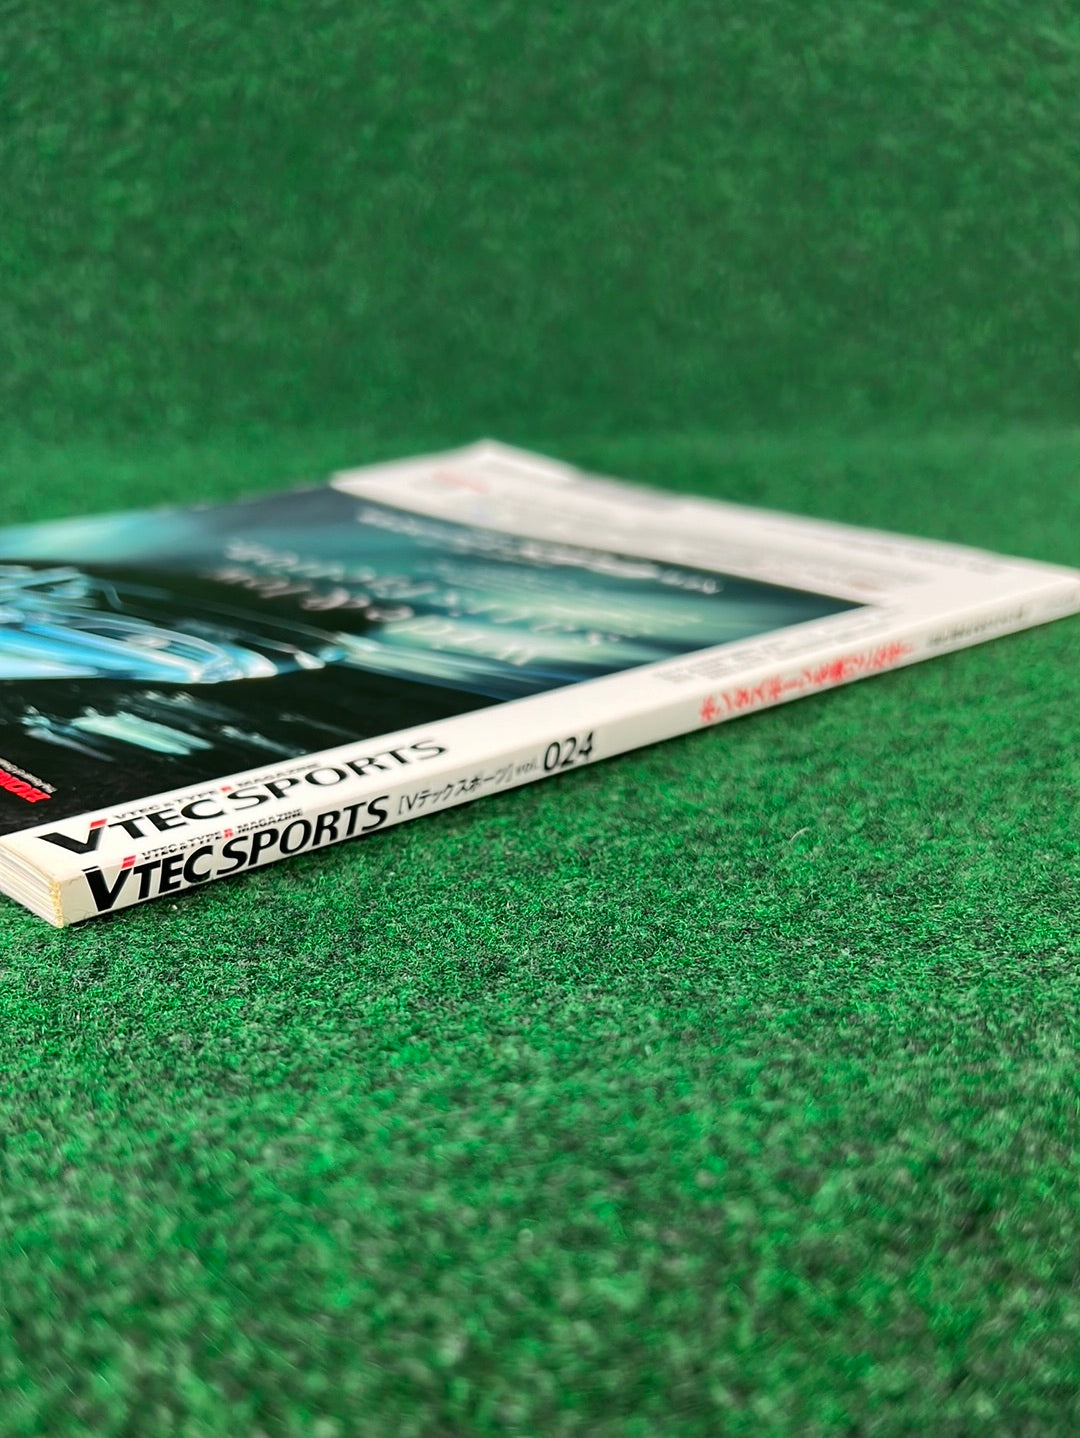 VTEC SPORTS Magazine - Vol. 24